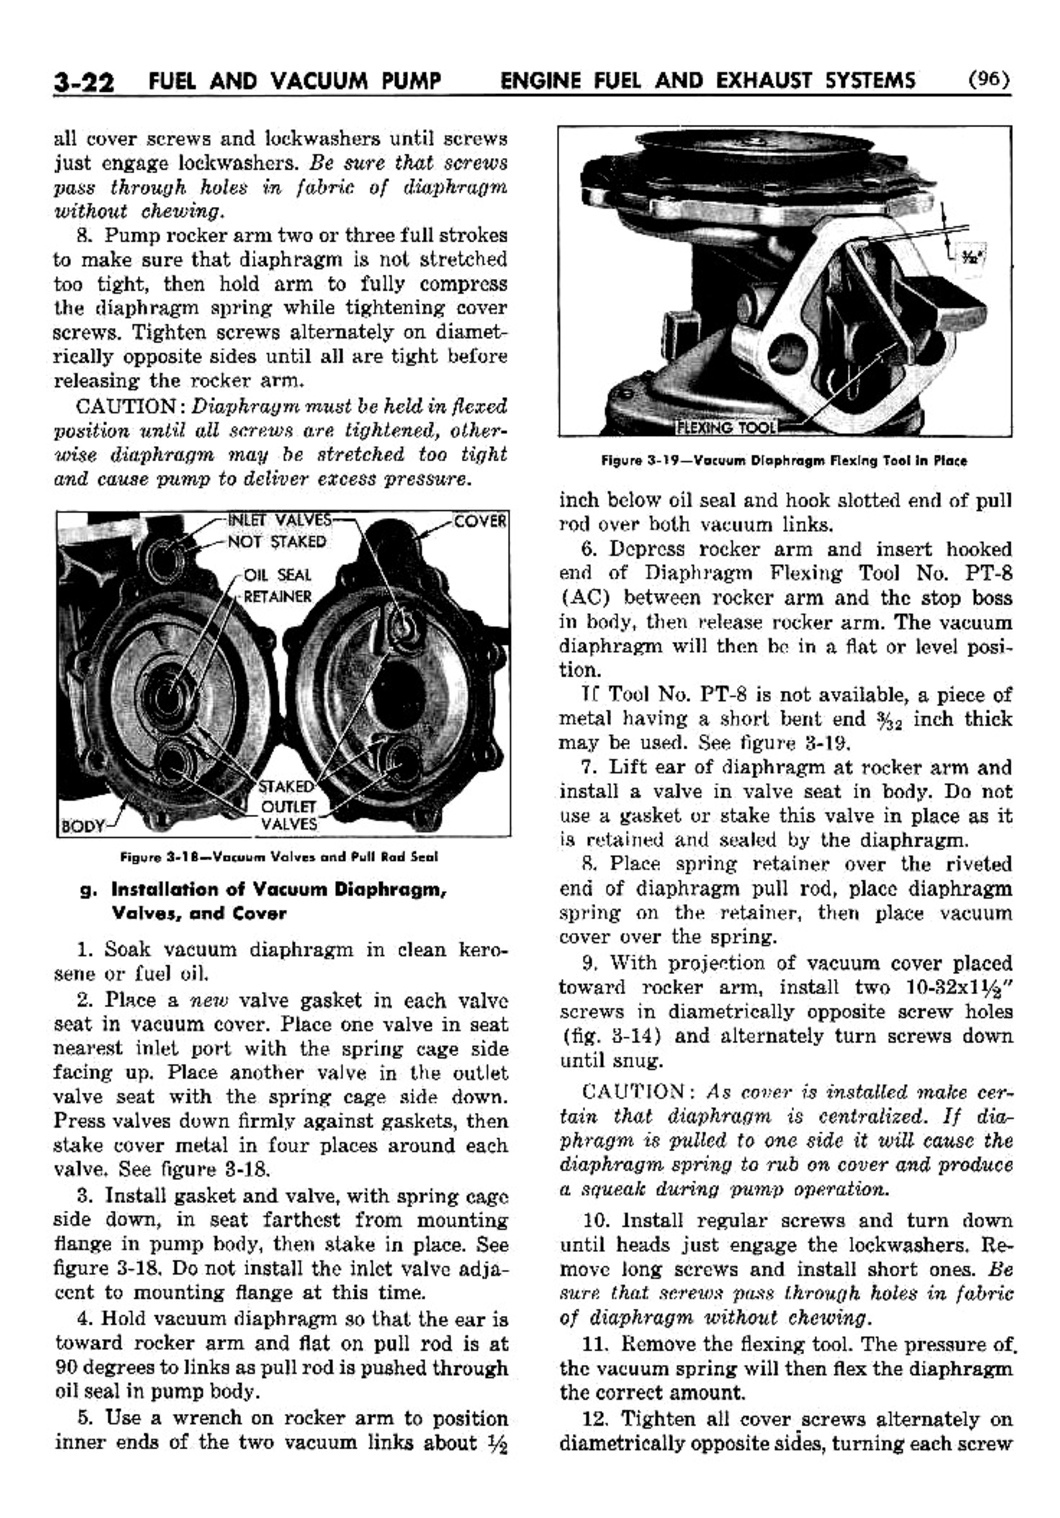 n_04 1952 Buick Shop Manual - Engine Fuel & Exhaust-022-022.jpg